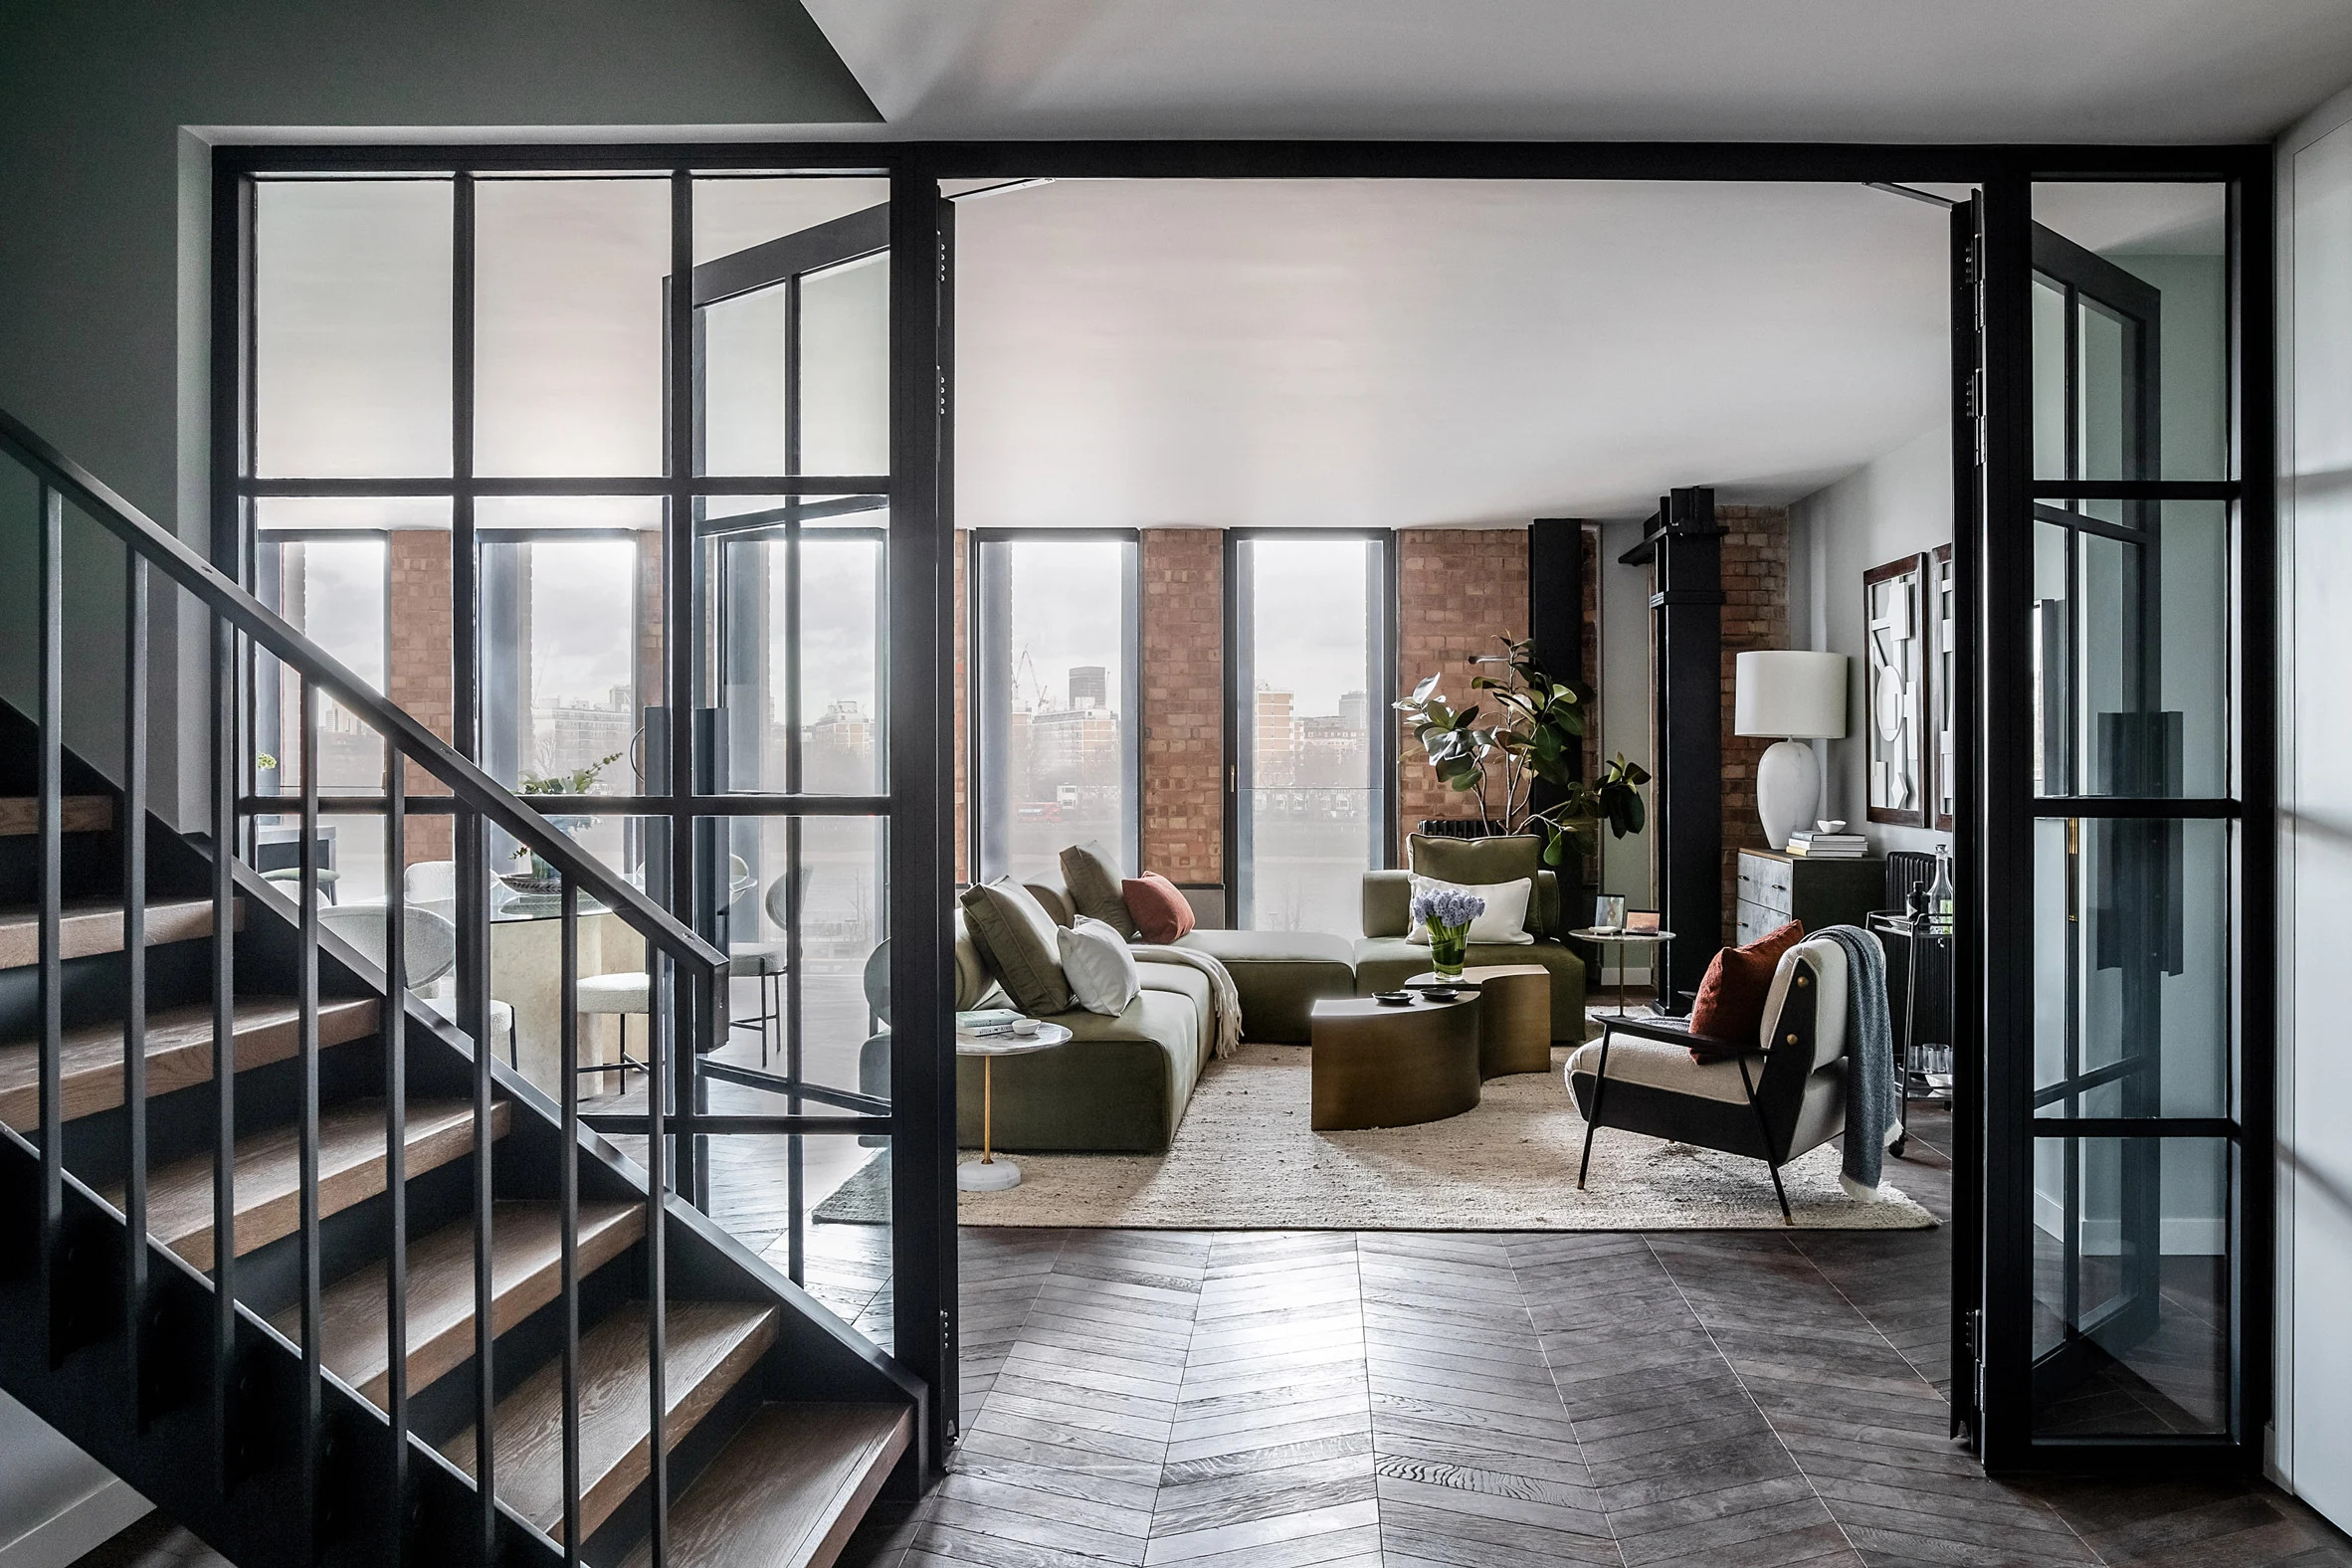 Battersea Powerstation apartment by Michaelis Boyd